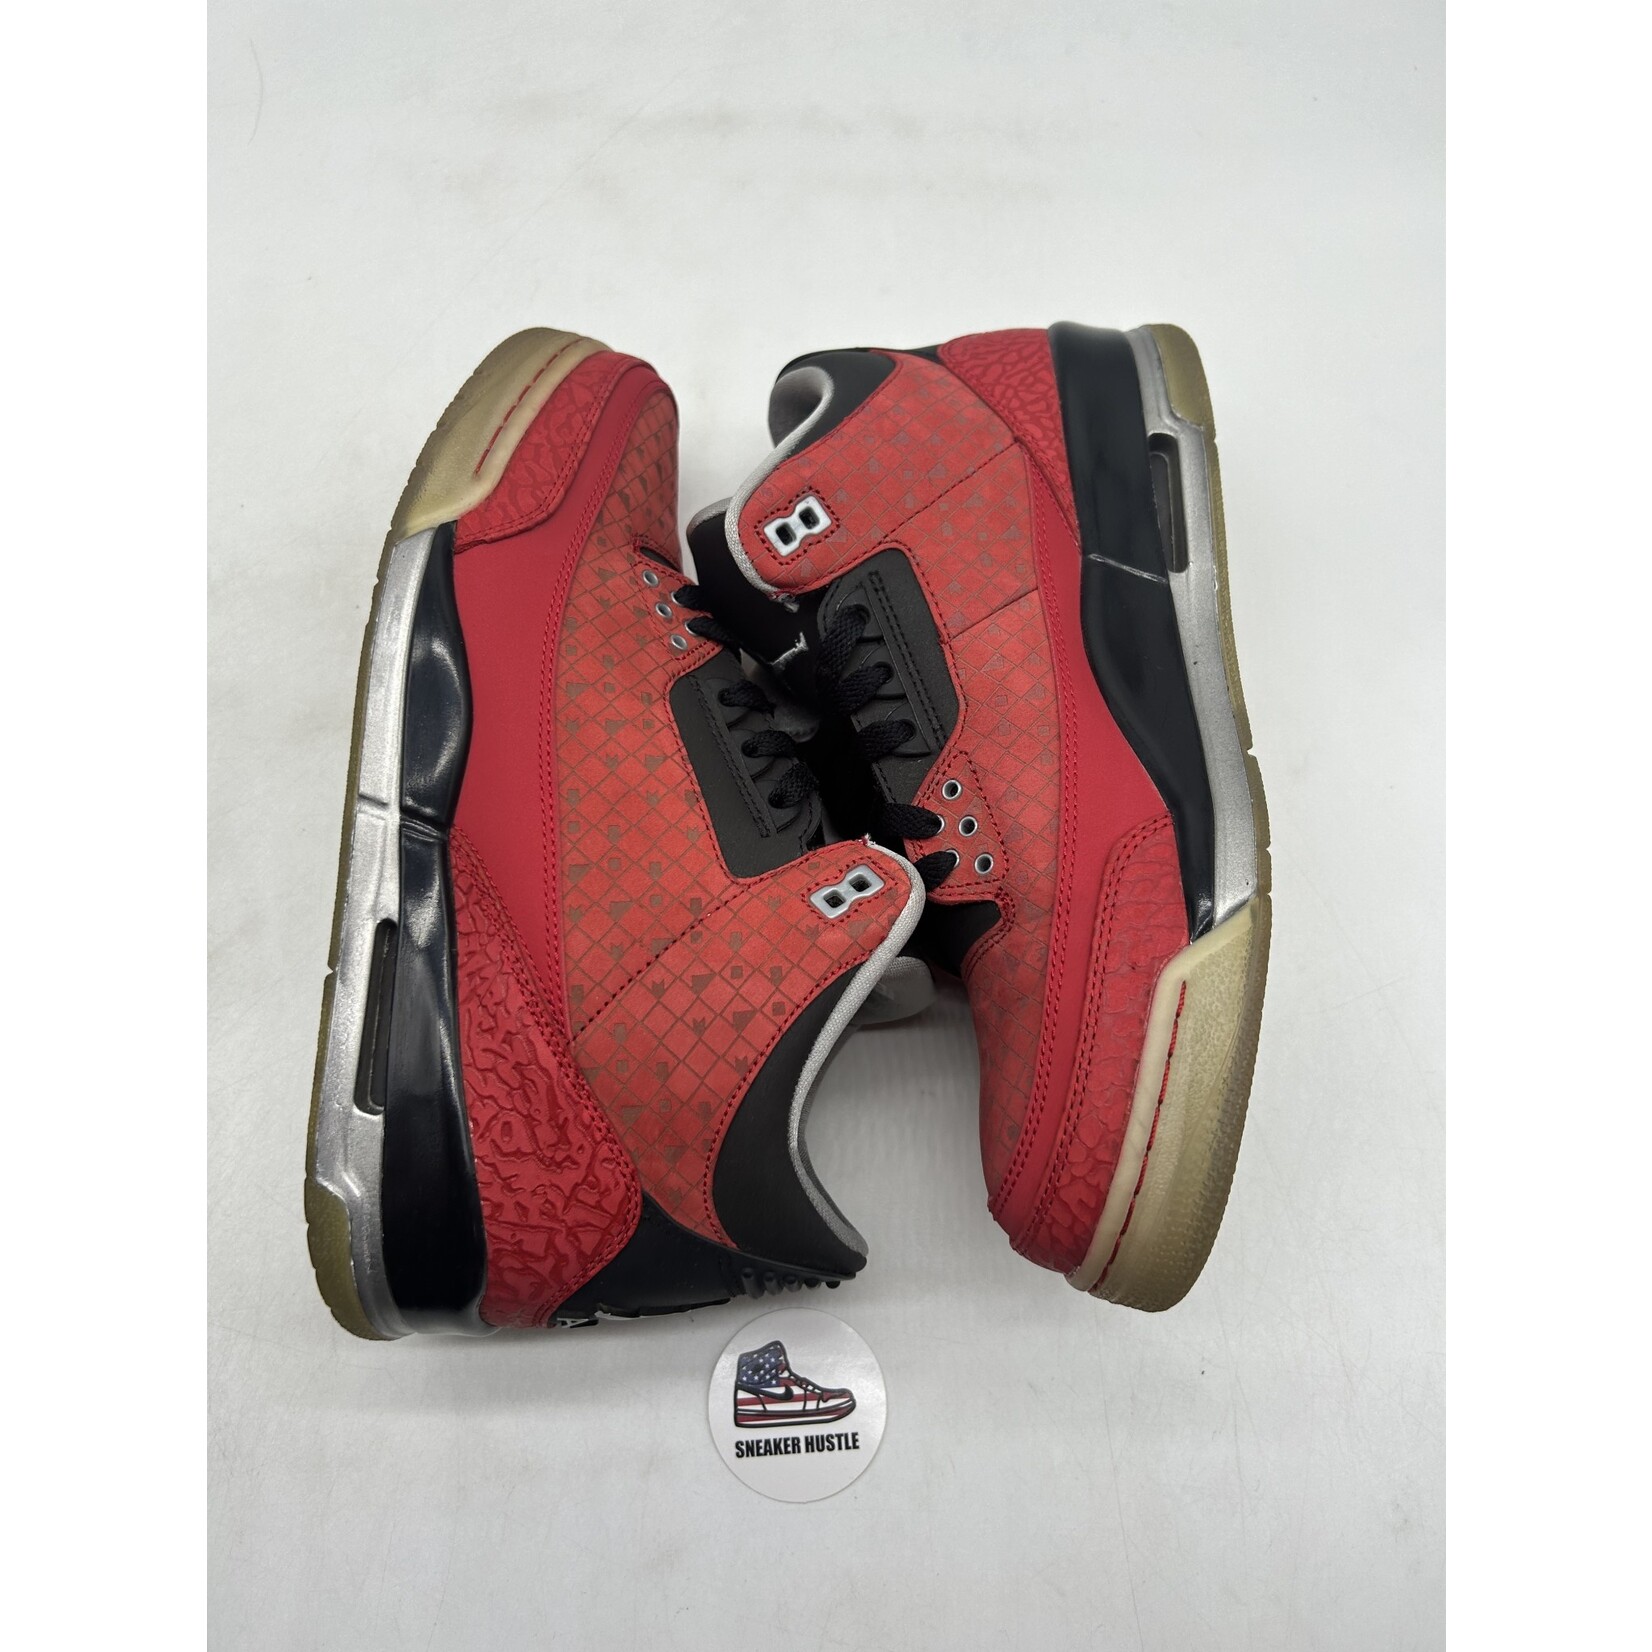 Air Jordan Jordan 3 Retro Doernbecher (2013)